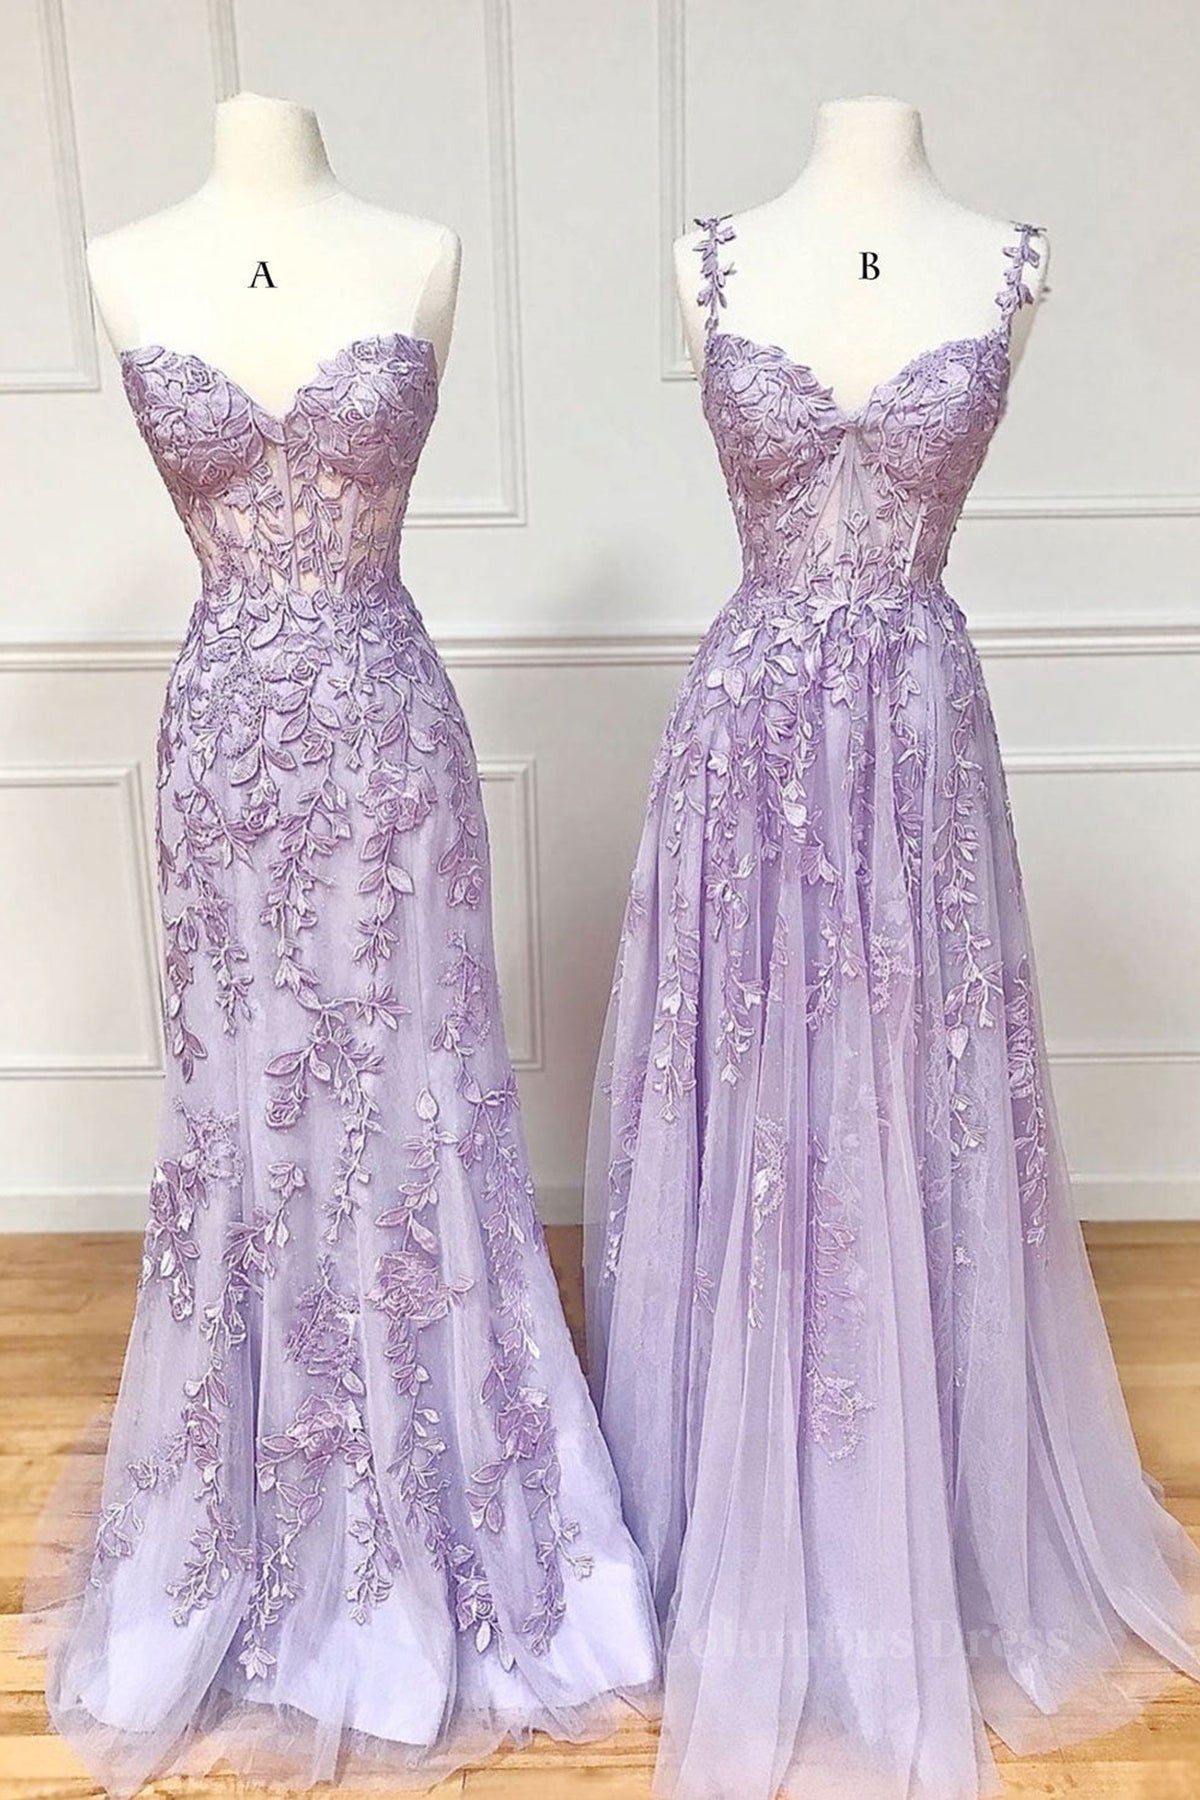 Sweetheart Neck Purple Lace Long Corset Prom Dress, Strapless Purple Corset Formal Dress, Mermaid Purple Evening Dress outfit, Bridesmaid Dress White